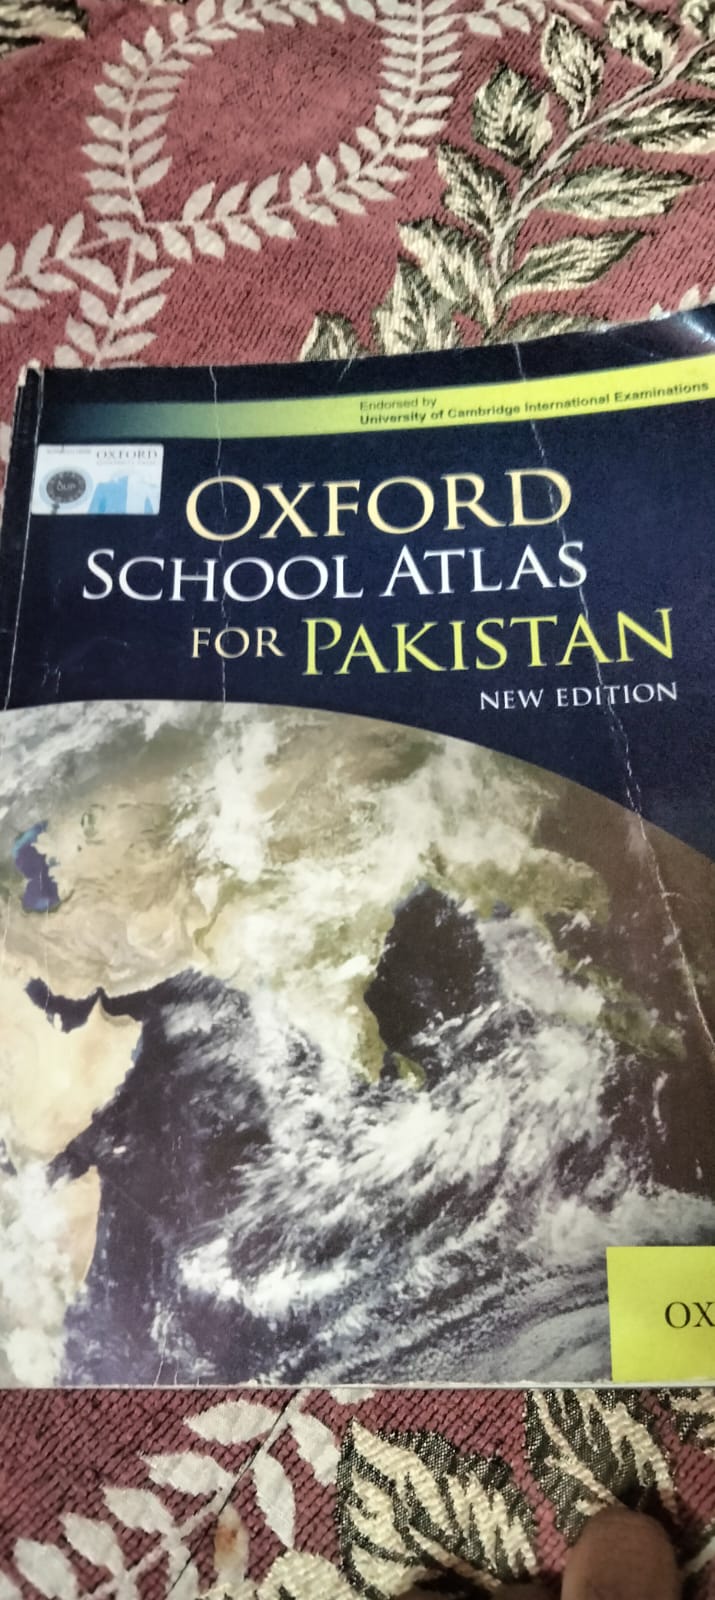 Oxford School Atlas for Pakistan New Edition